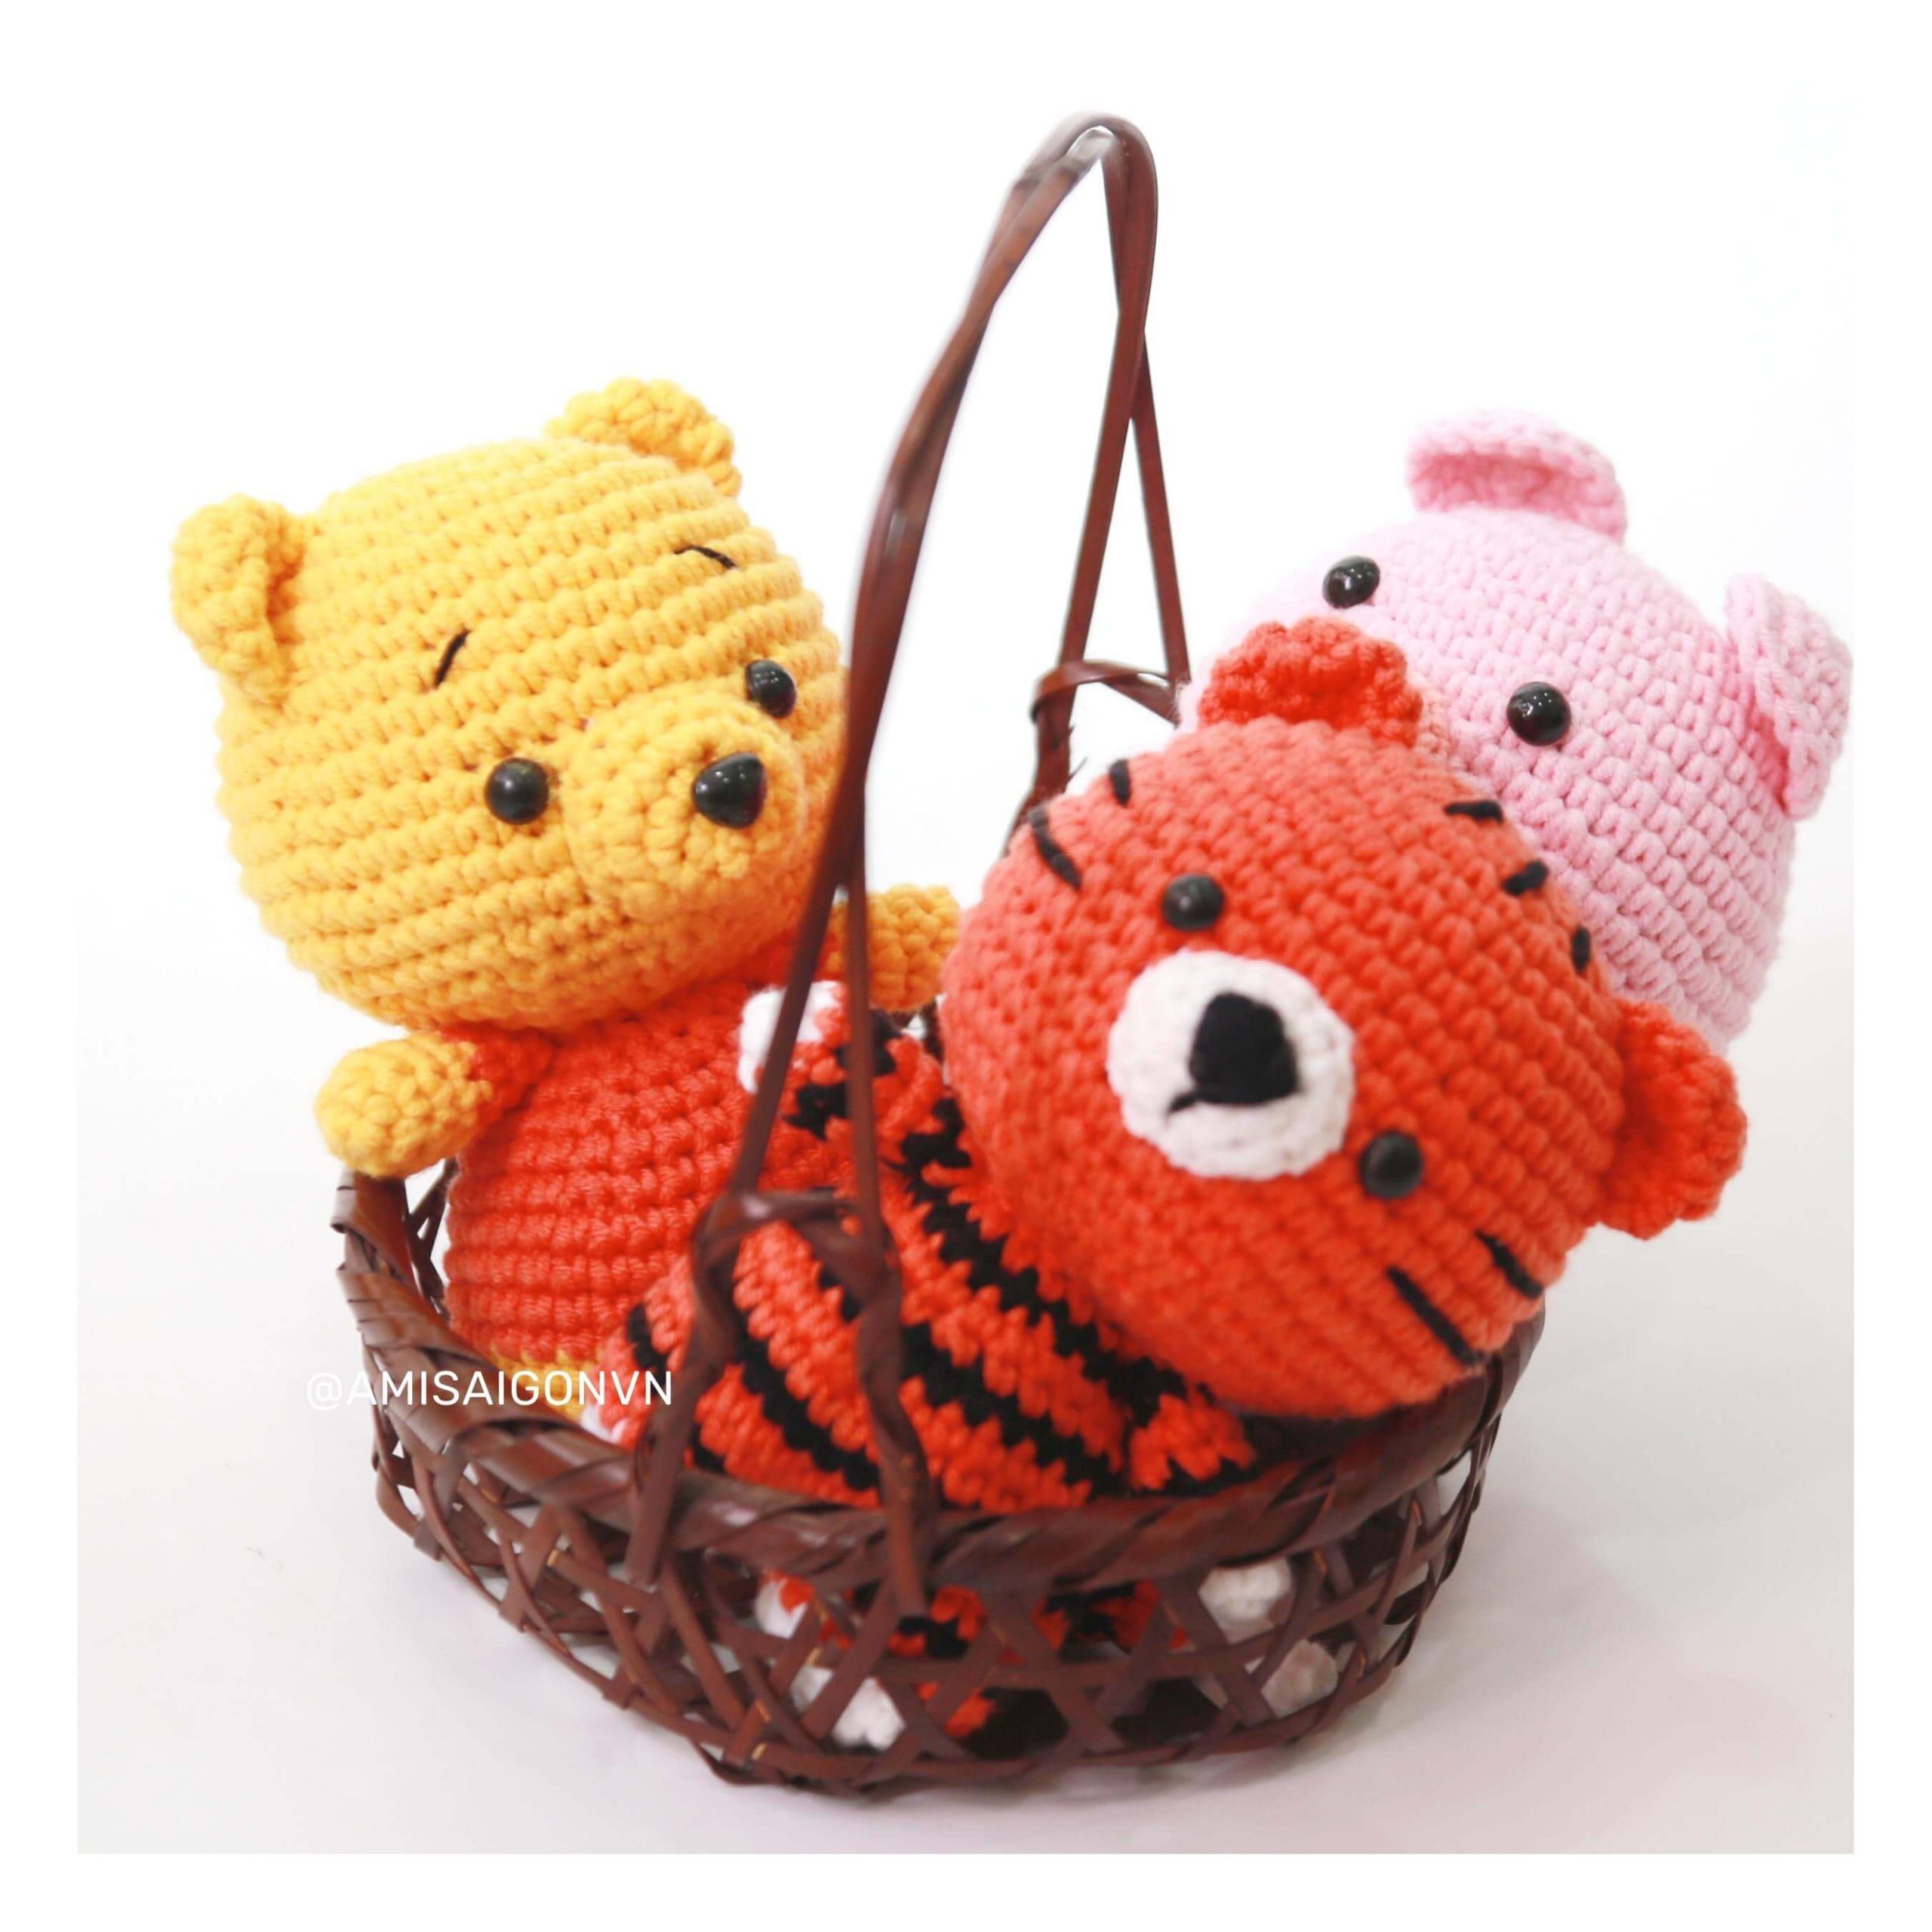 pig-amigurumi-crochet-pattern-amisaigon (7)